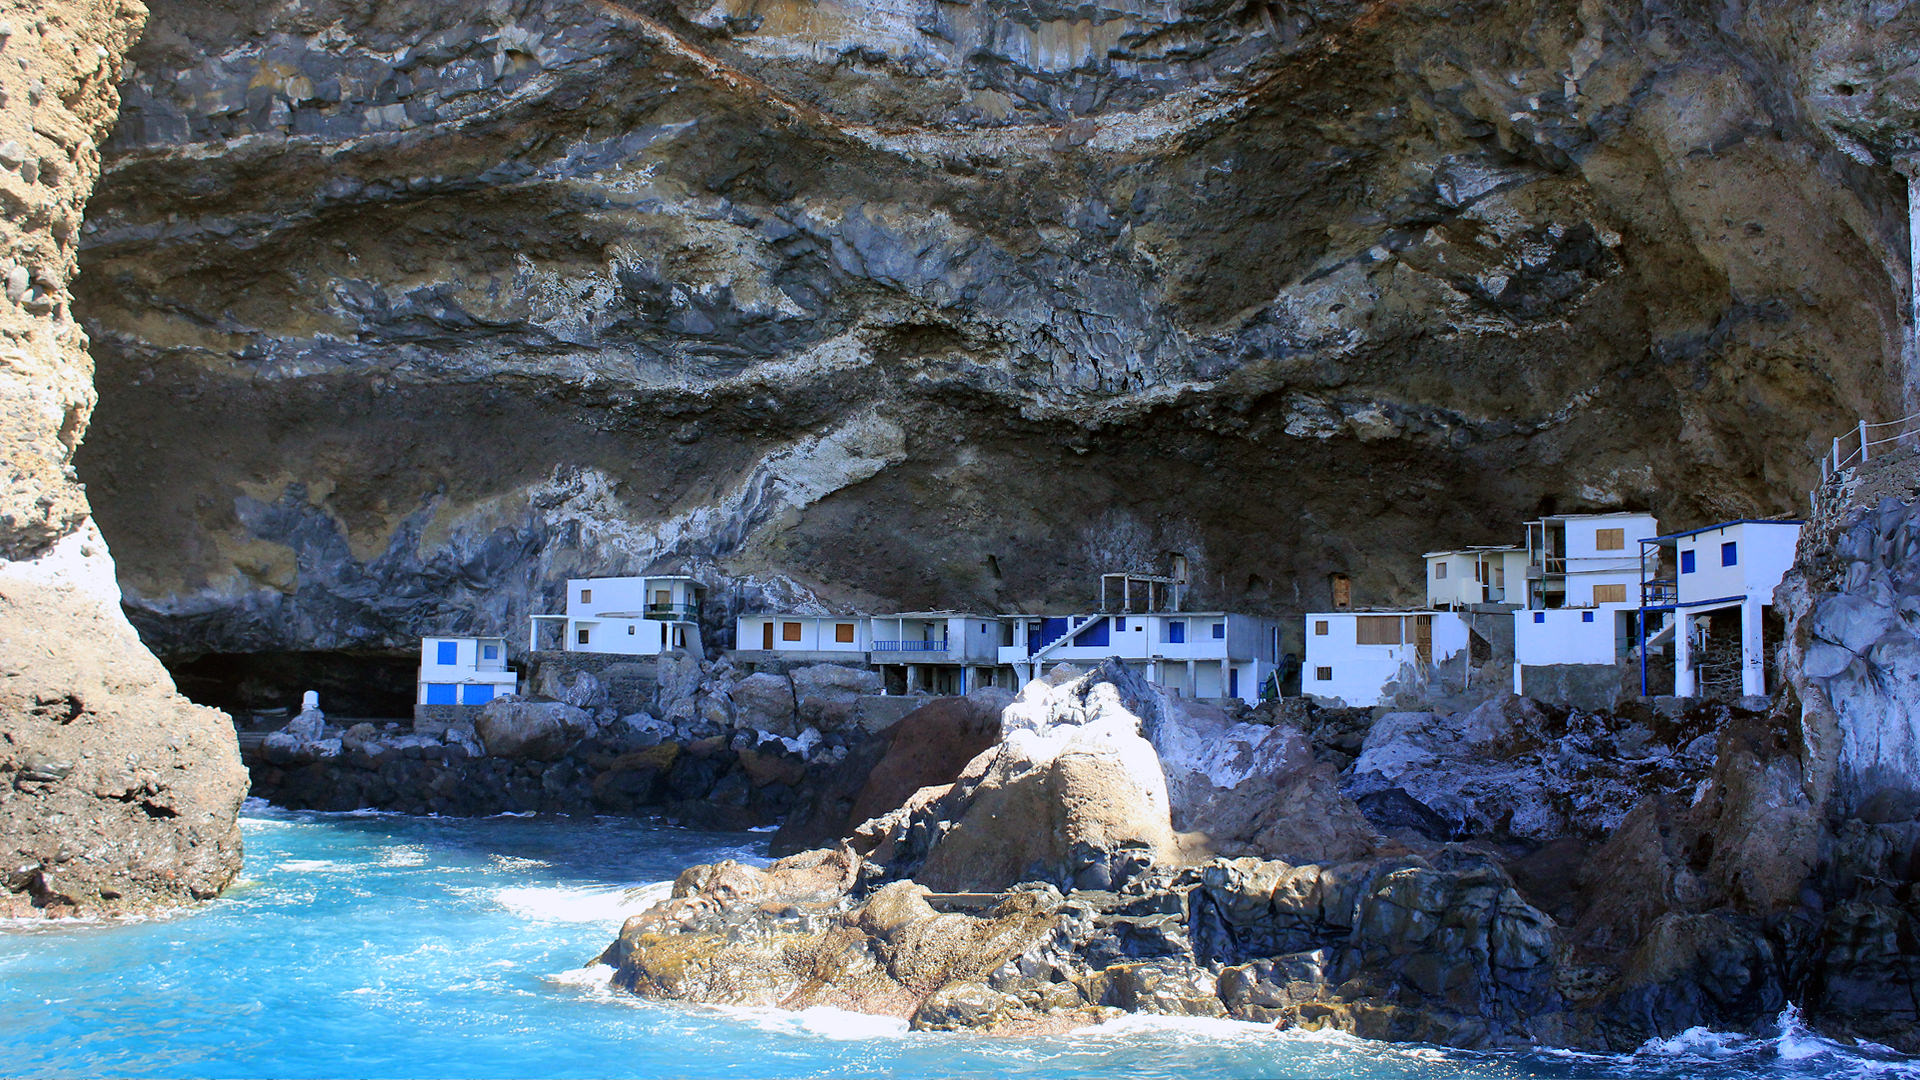 La cueva de Candelaria o proìs de Tijarafe: un villaggio nella roccia